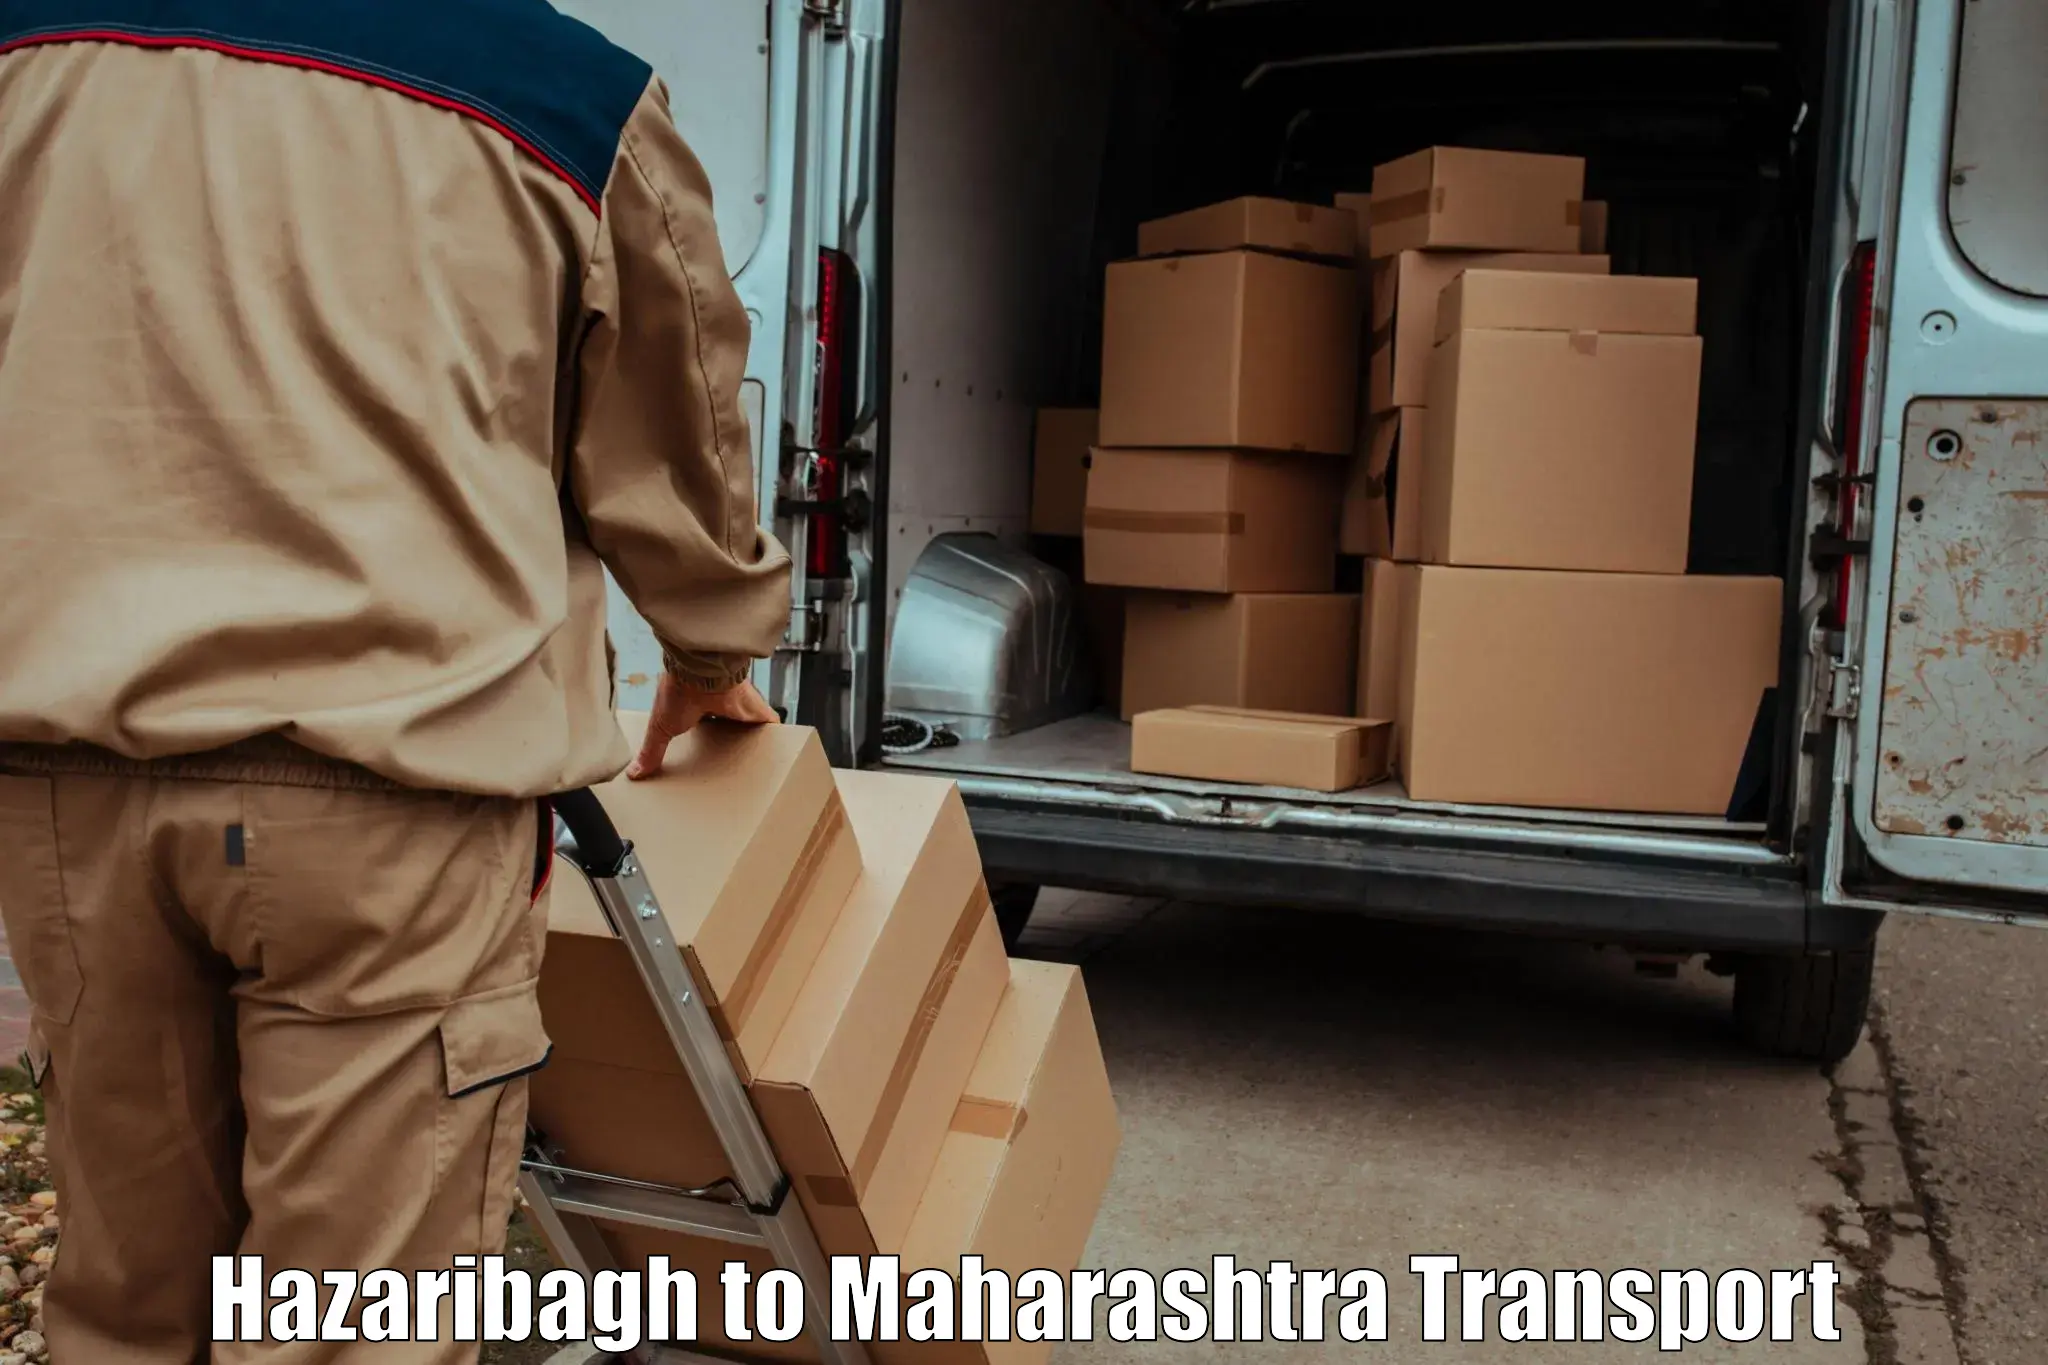 Air freight transport services in Hazaribagh to Dusarbid